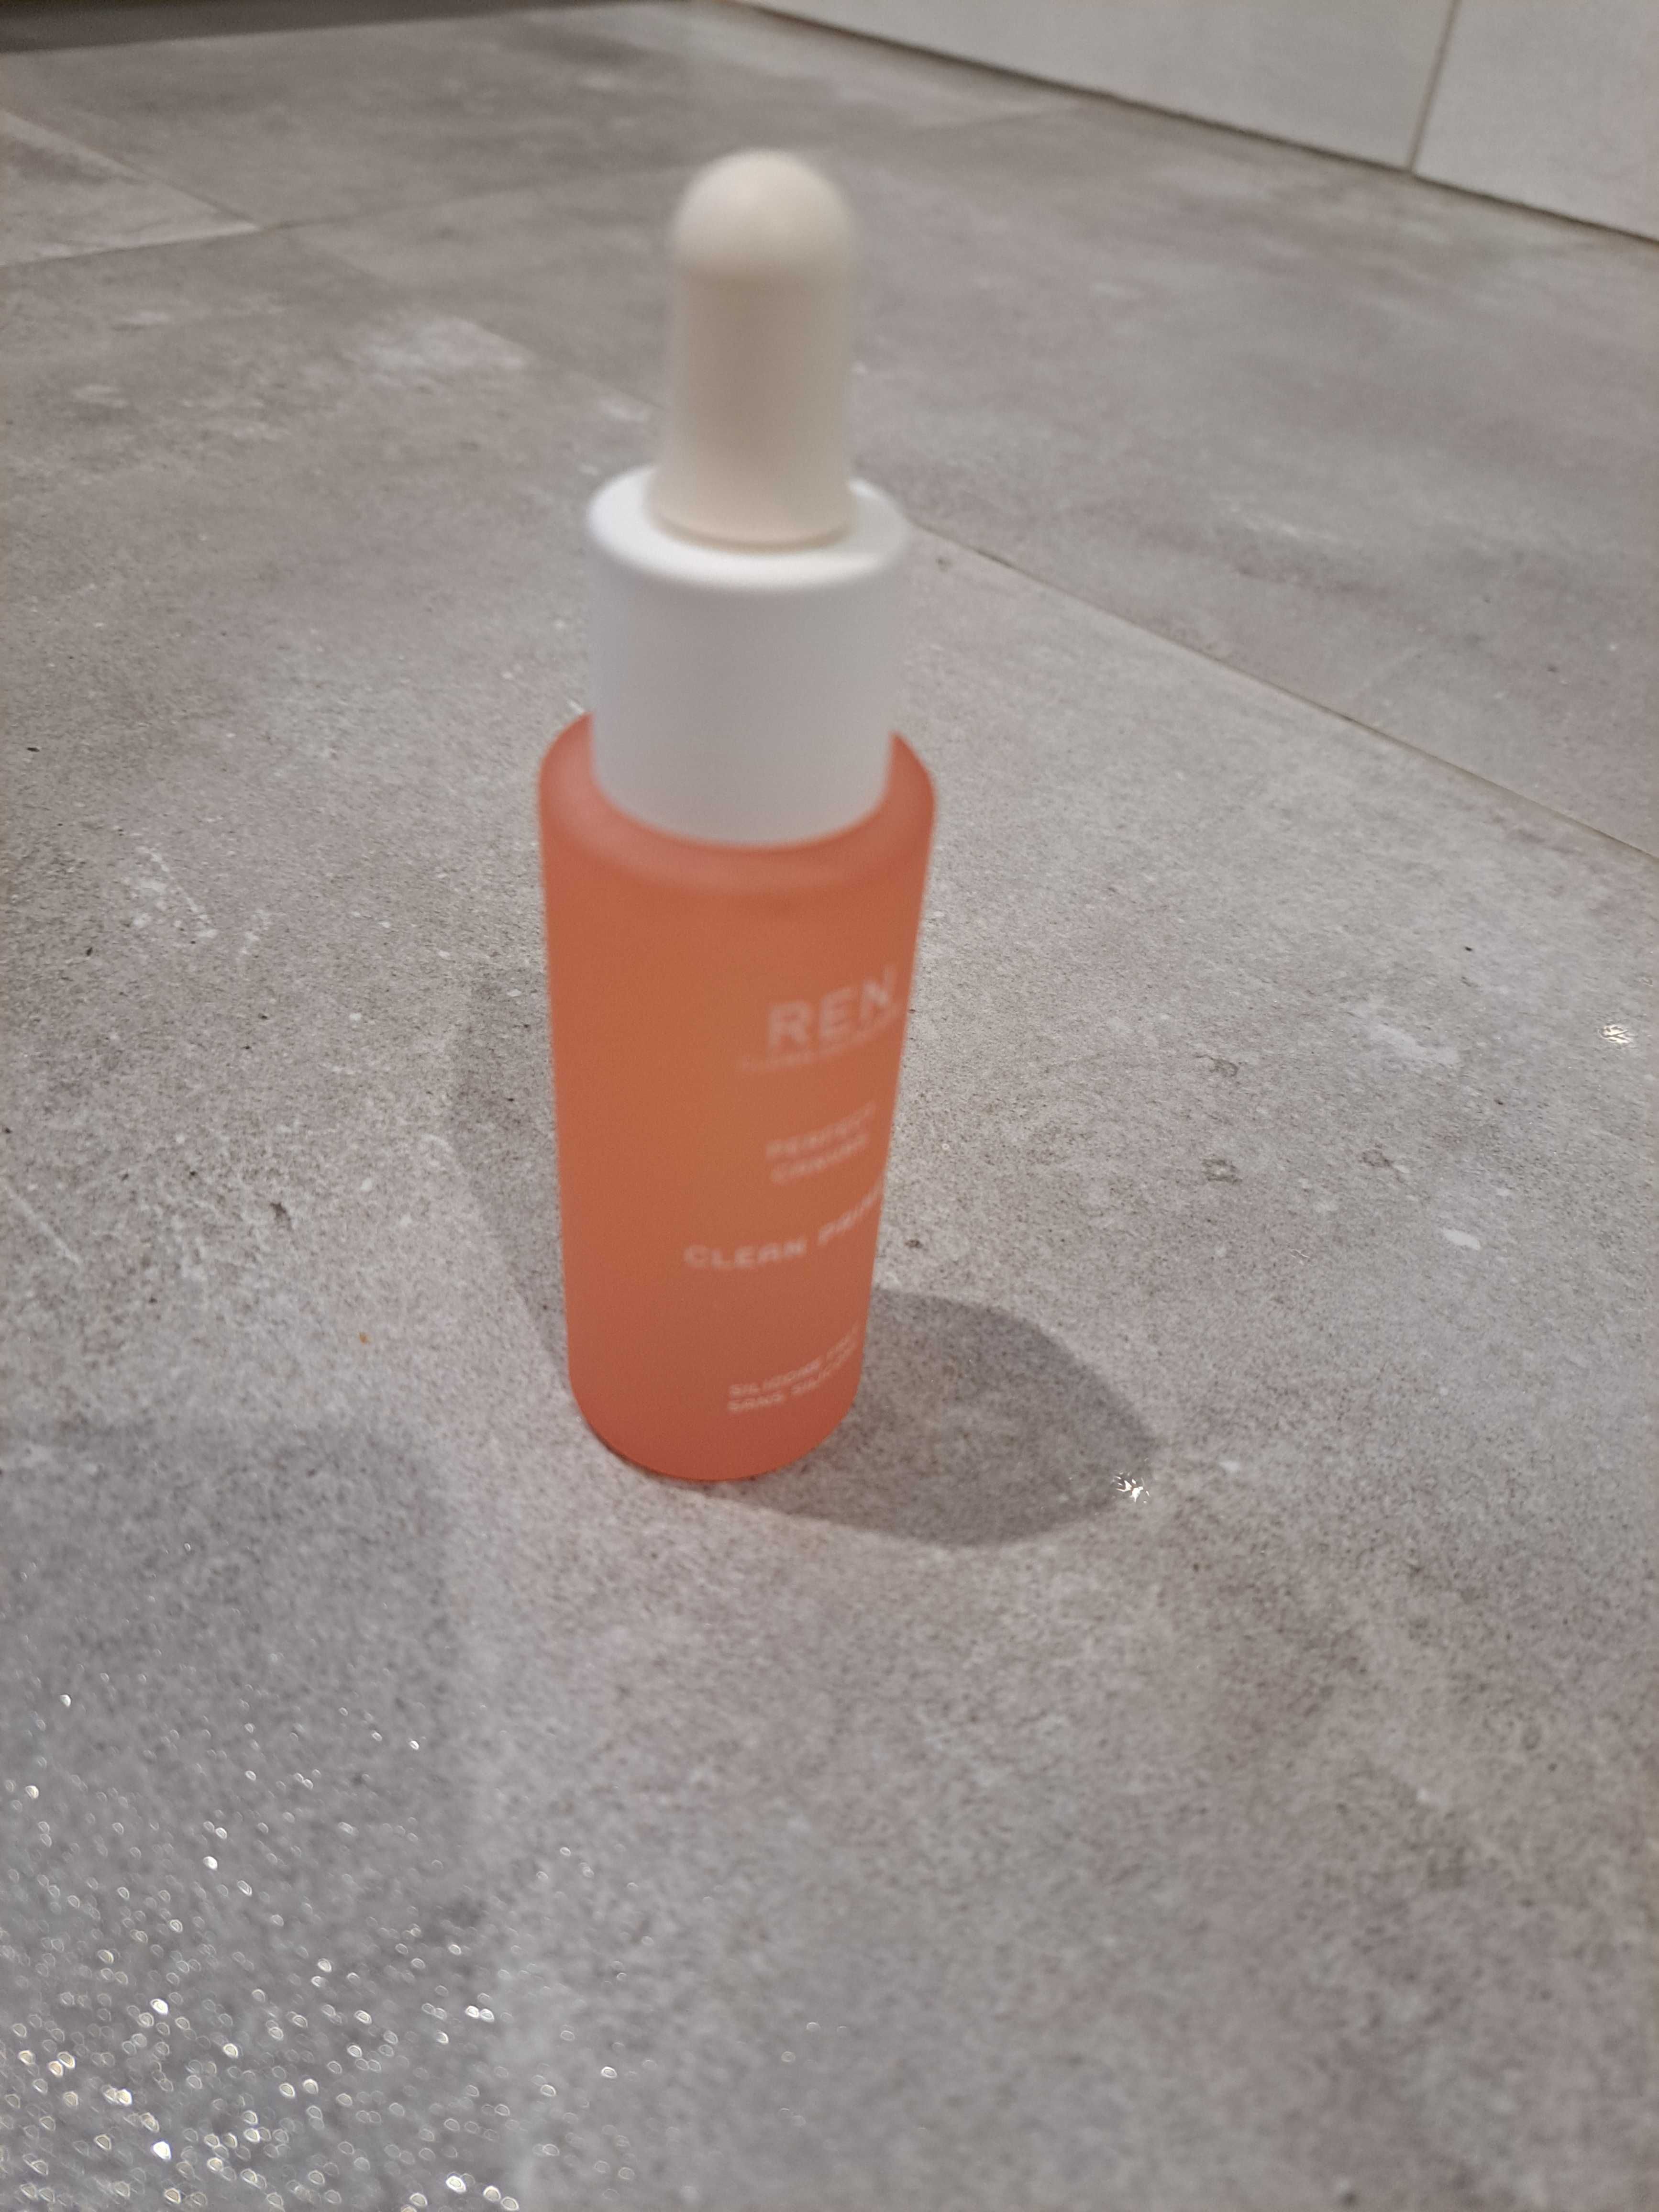 REN Clean Skincare Perfect Canvas Clean Primer, 30 ml